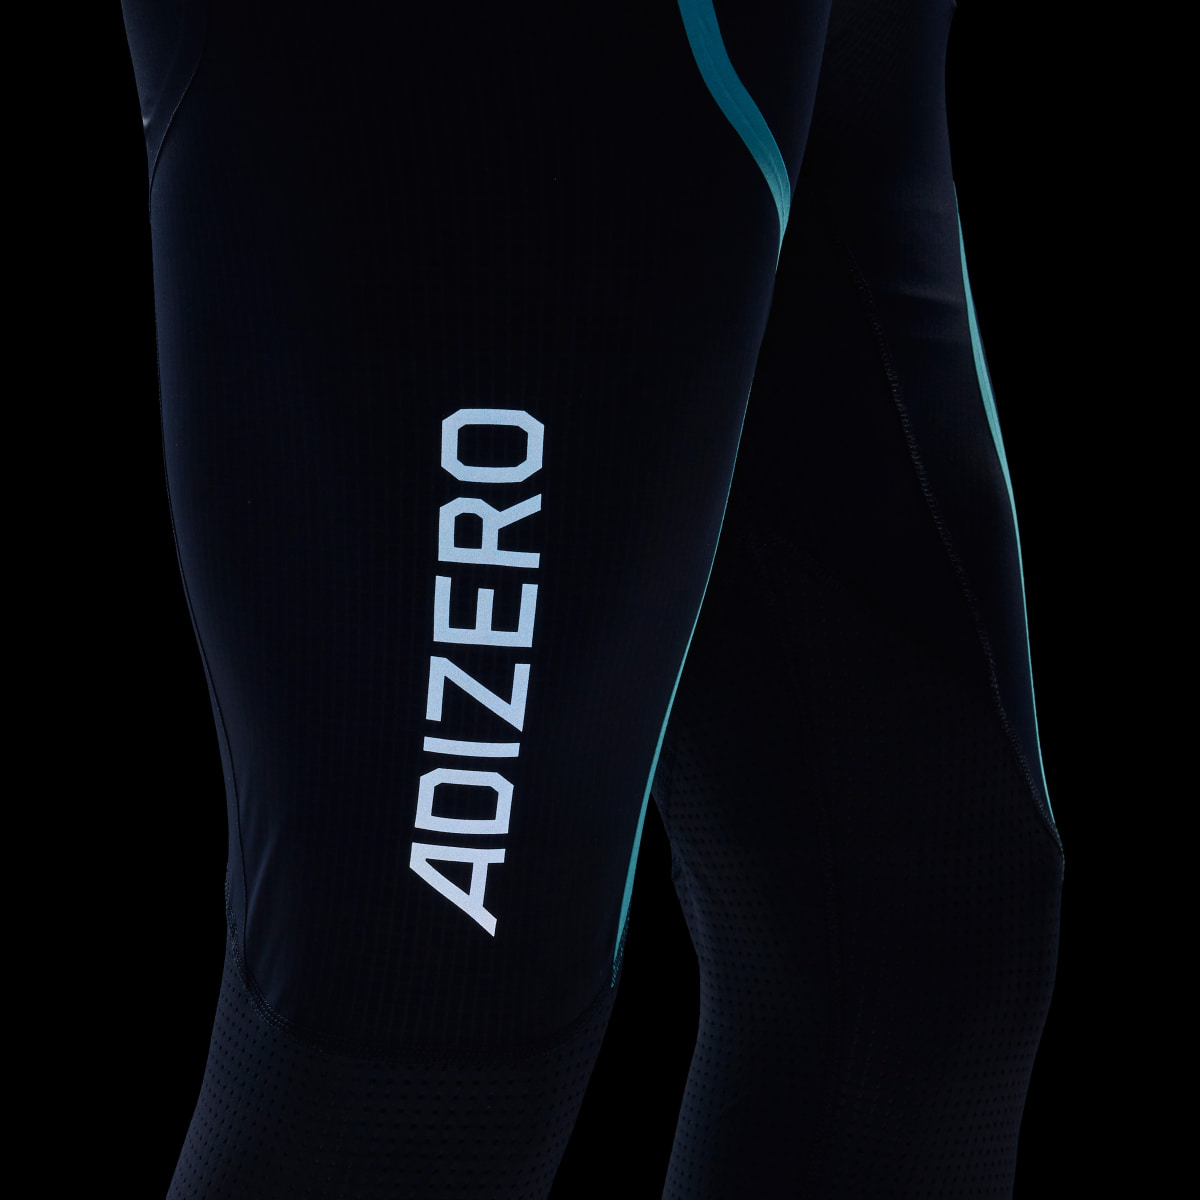 Adidas Adizero Running Leggings. 5